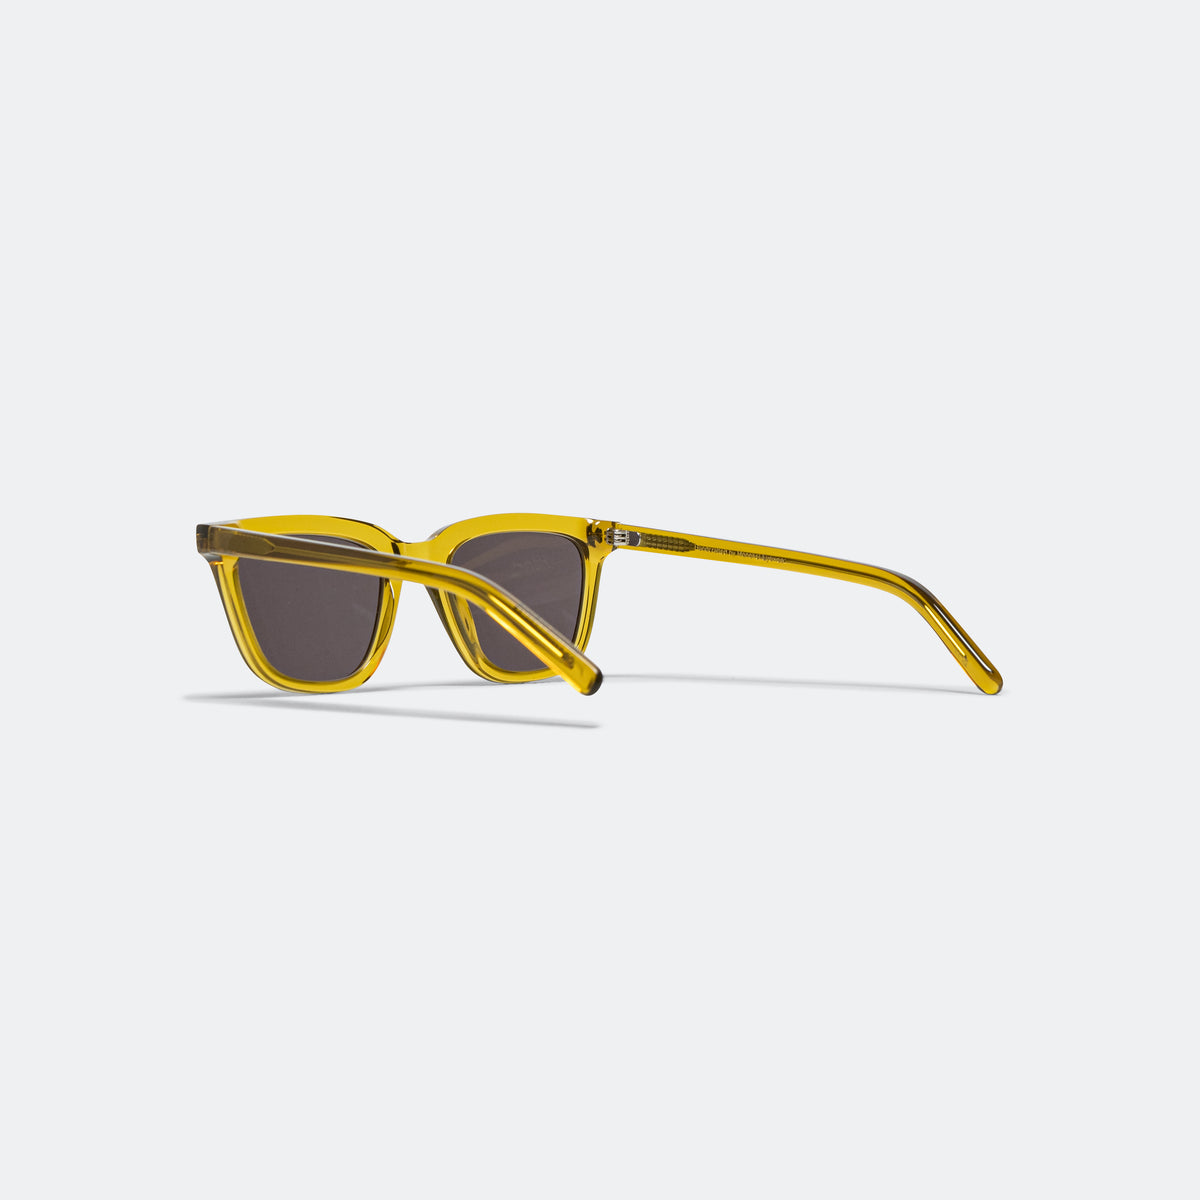 Monokel Robotnik Sunglasses Caramel/Grey Solid Lens | Up There